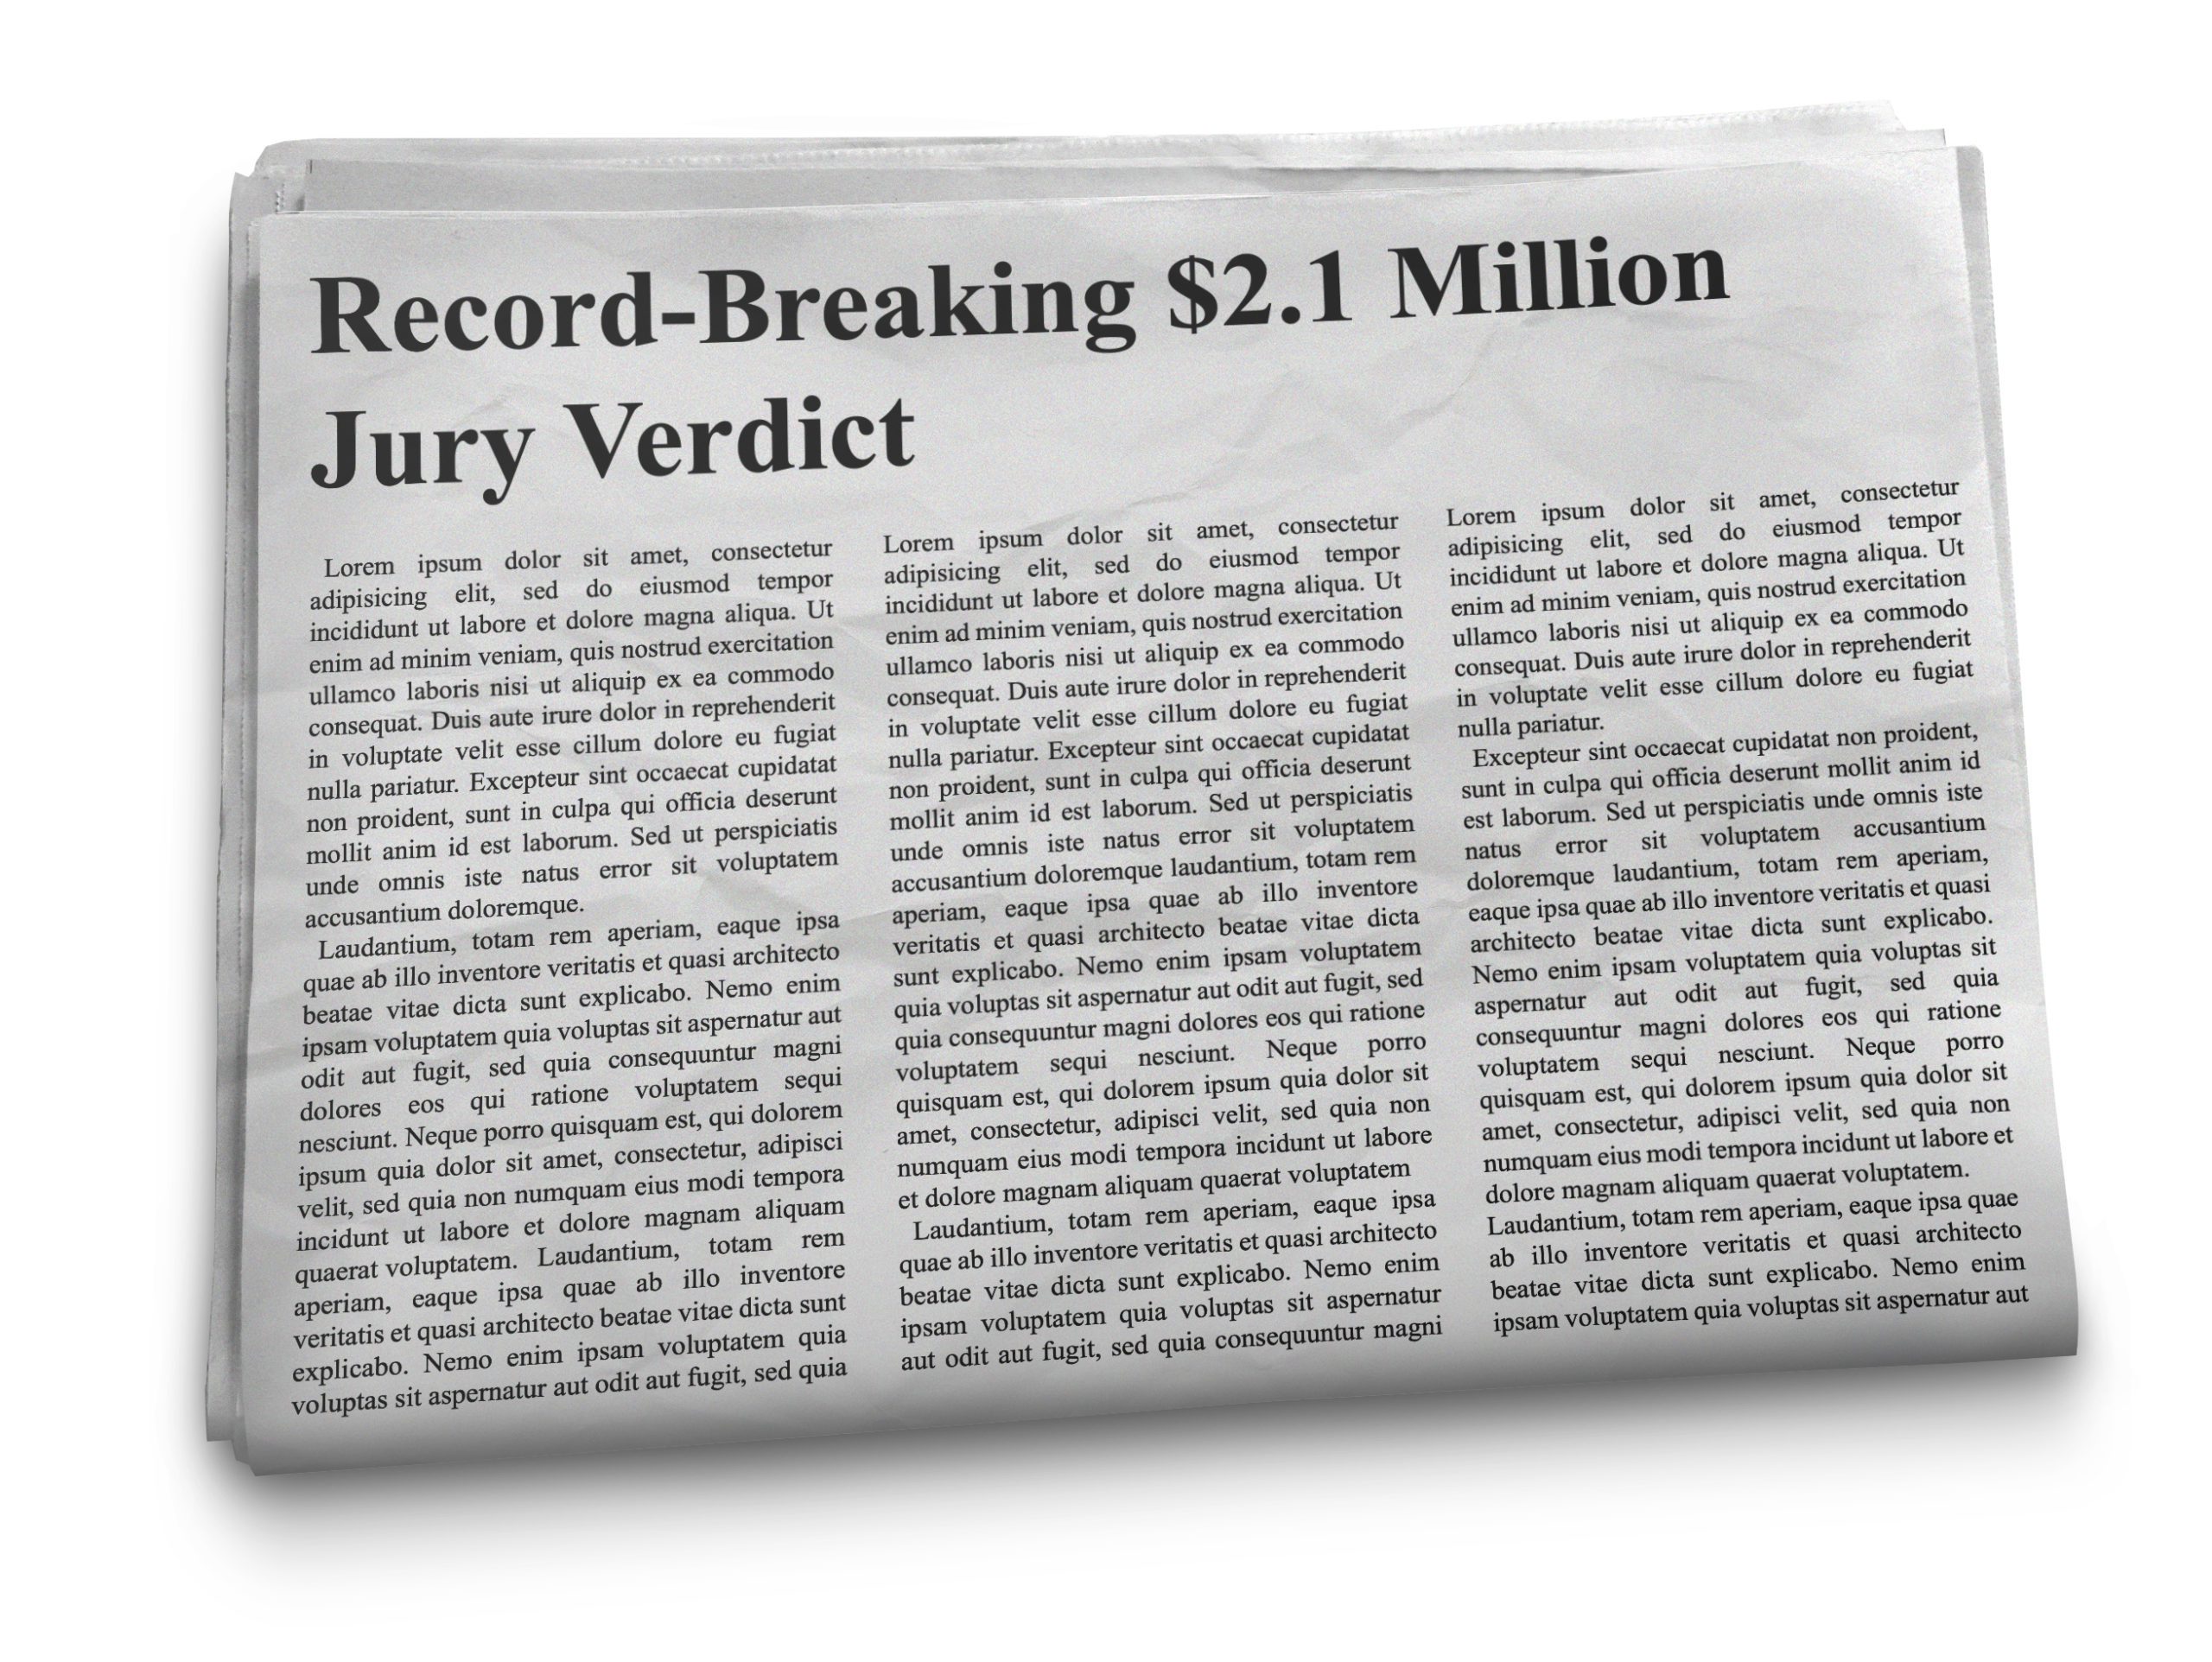 Newspaper with Record Breaking Verdict headline.